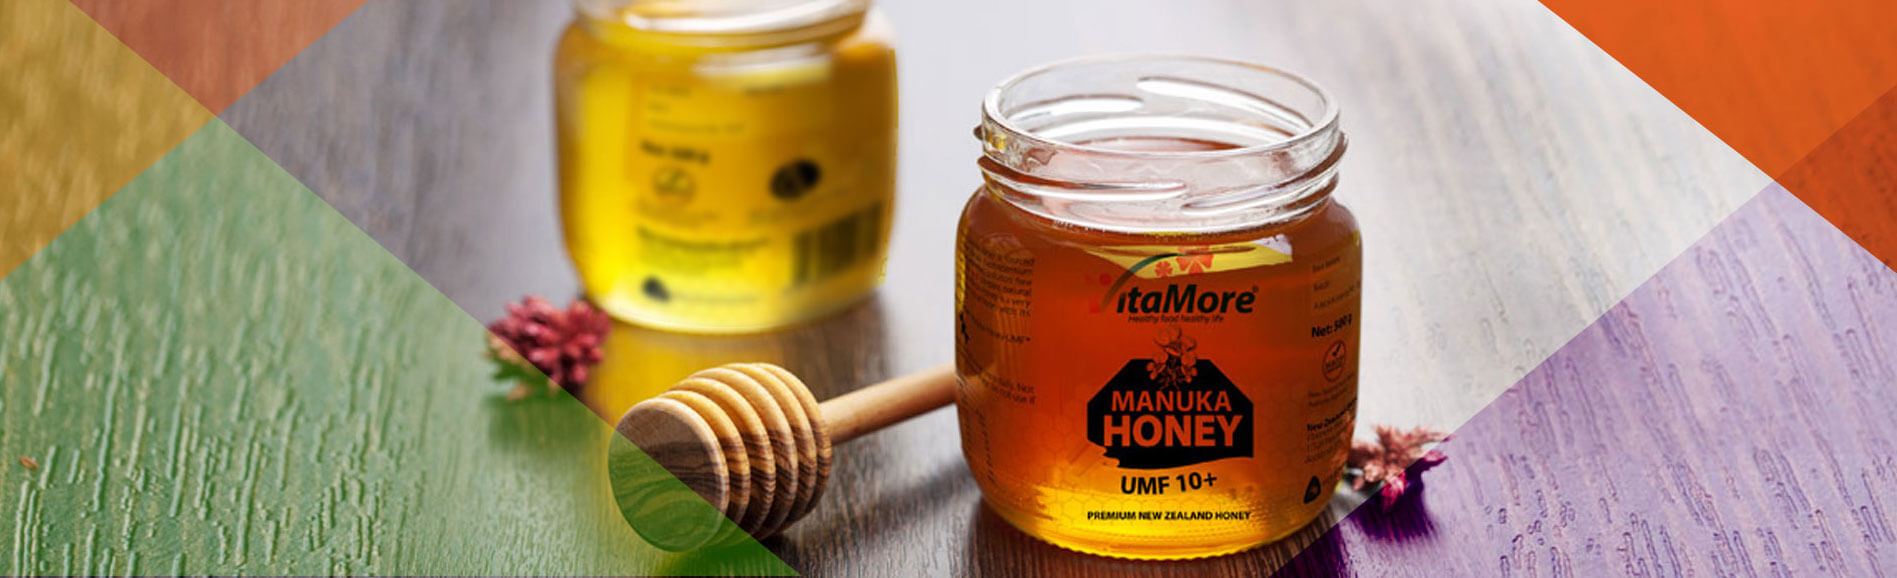 nz-manuka-honey-packaging-2